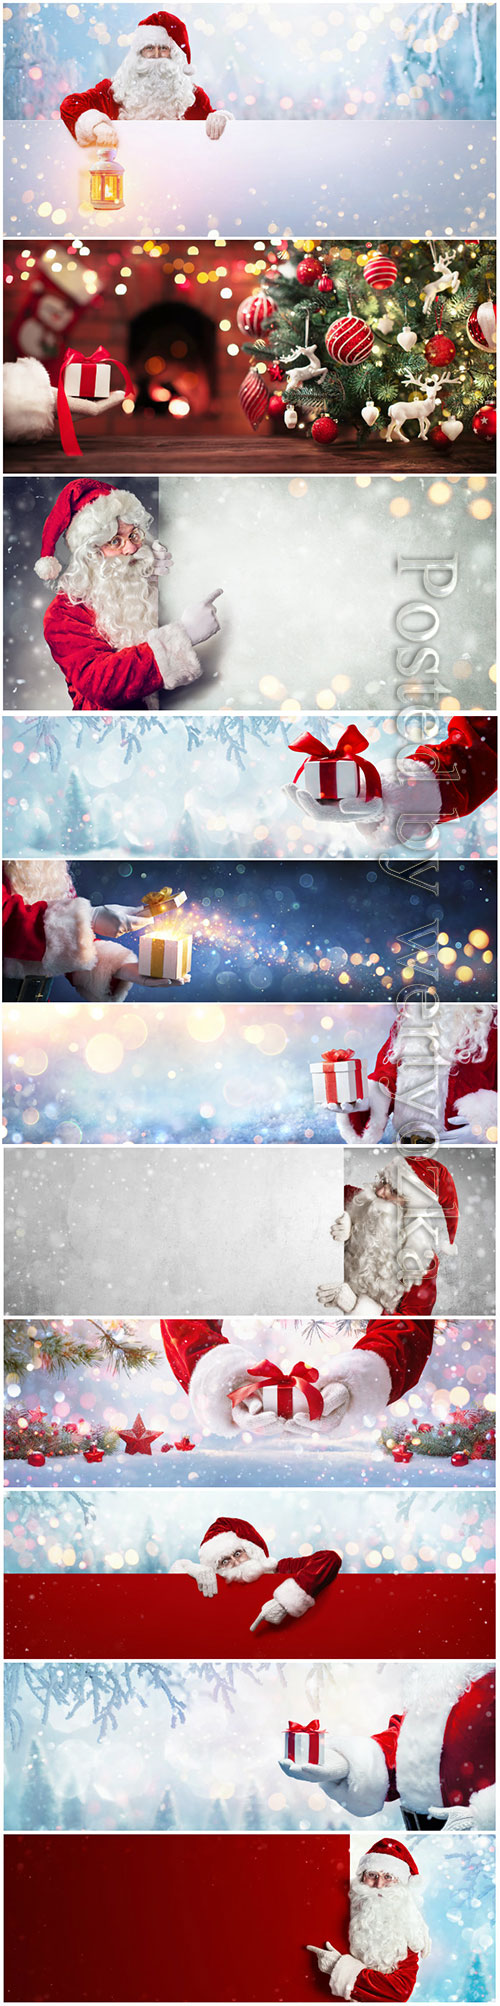 Santa Claus gift, Christmas holiday background